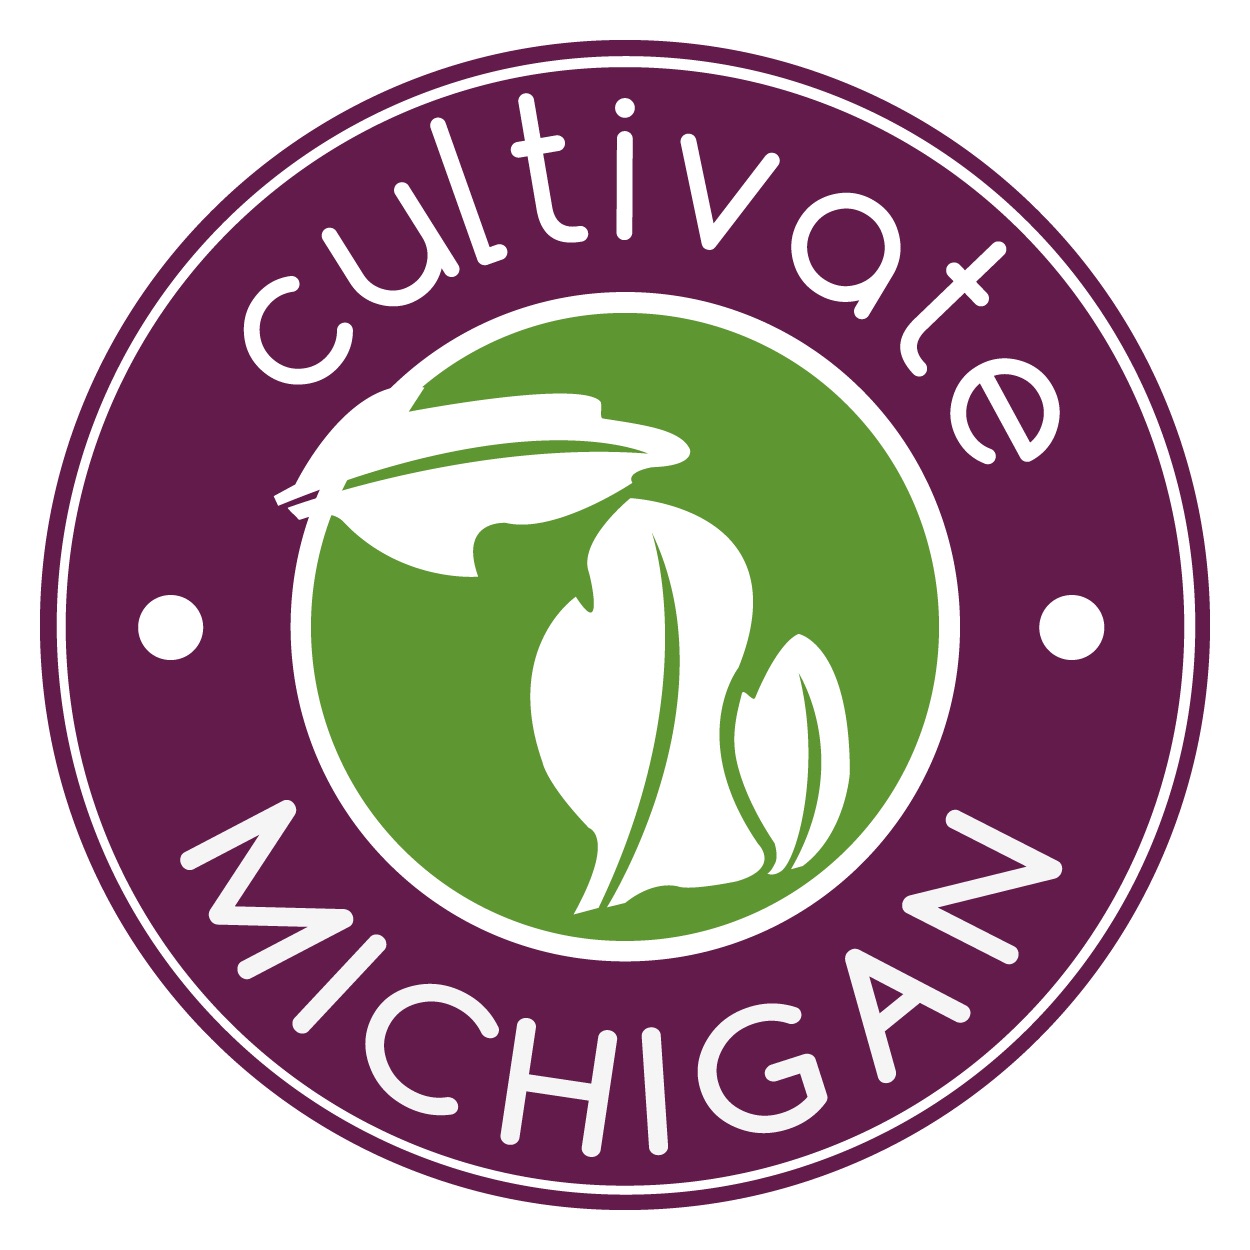 Purple and Green circle cultivate michigan logo